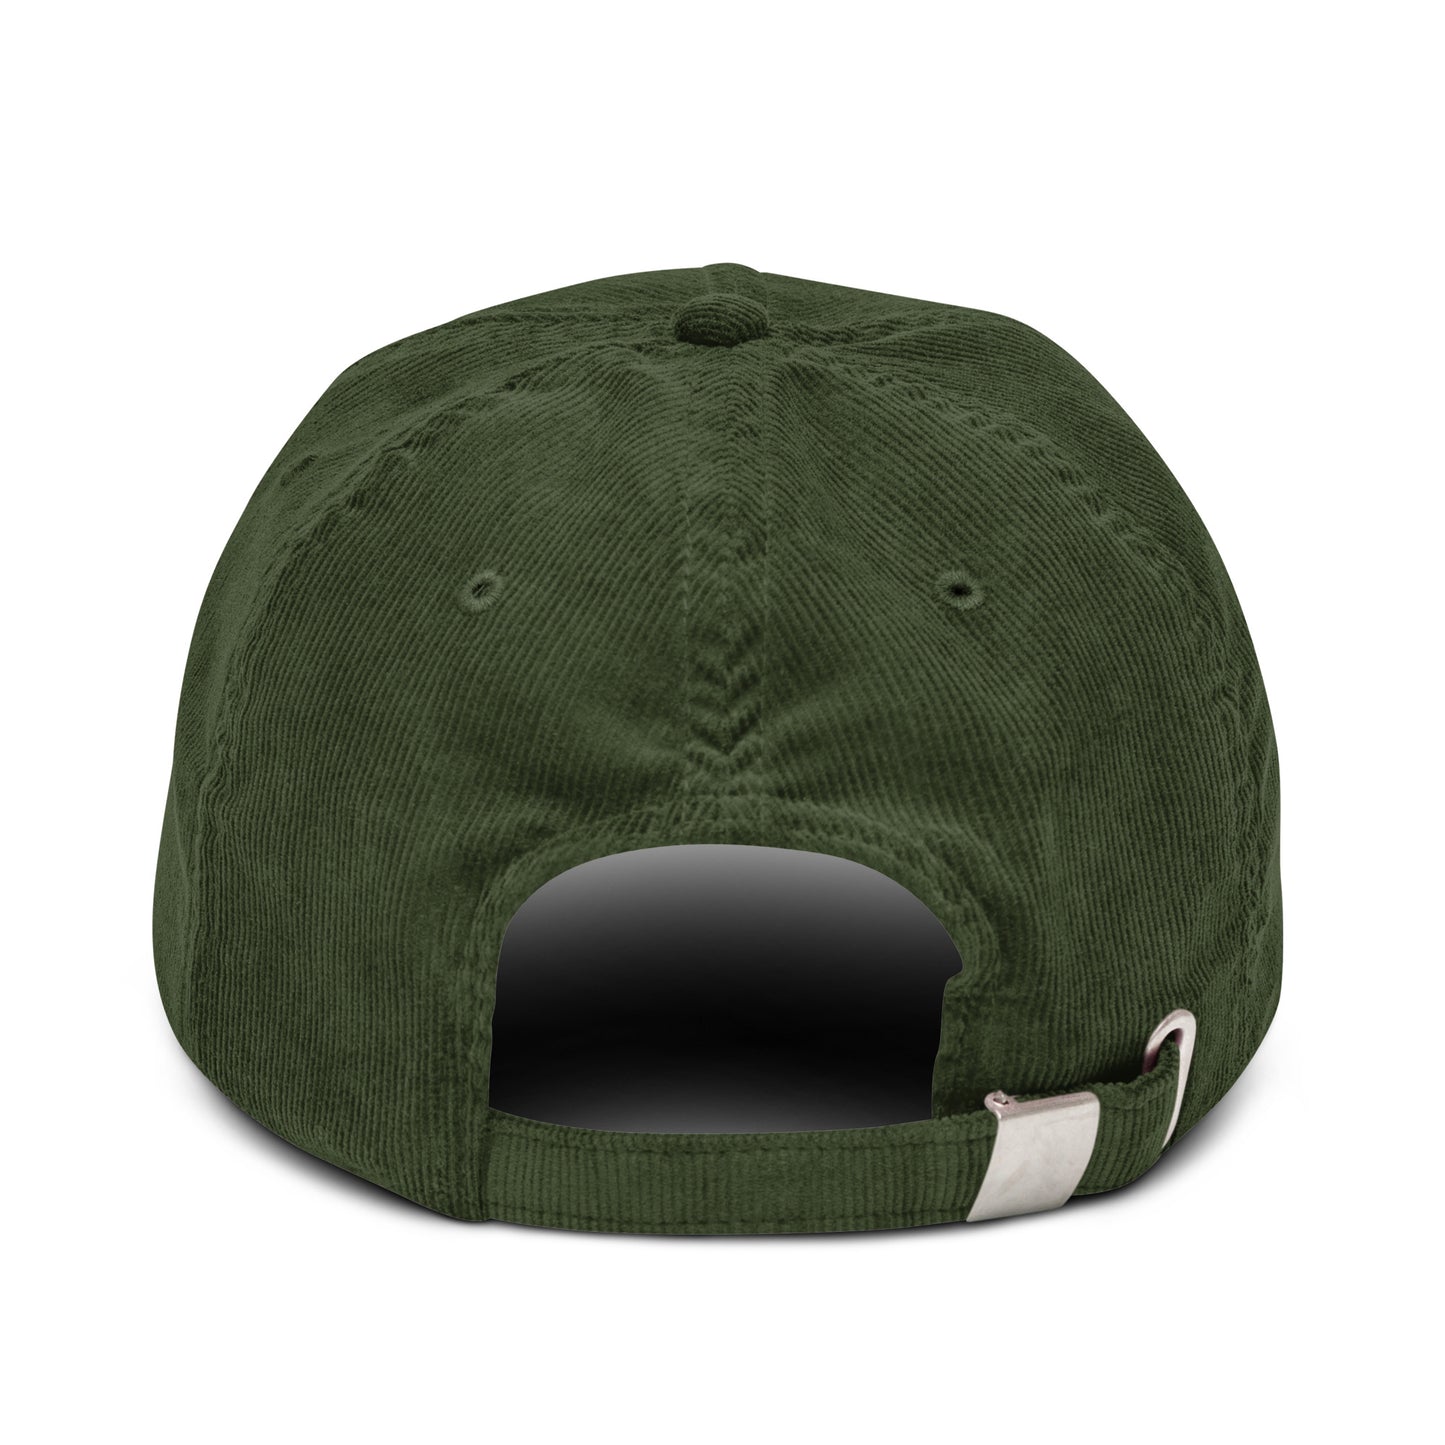 REHH - Corduroy hat (Olive)